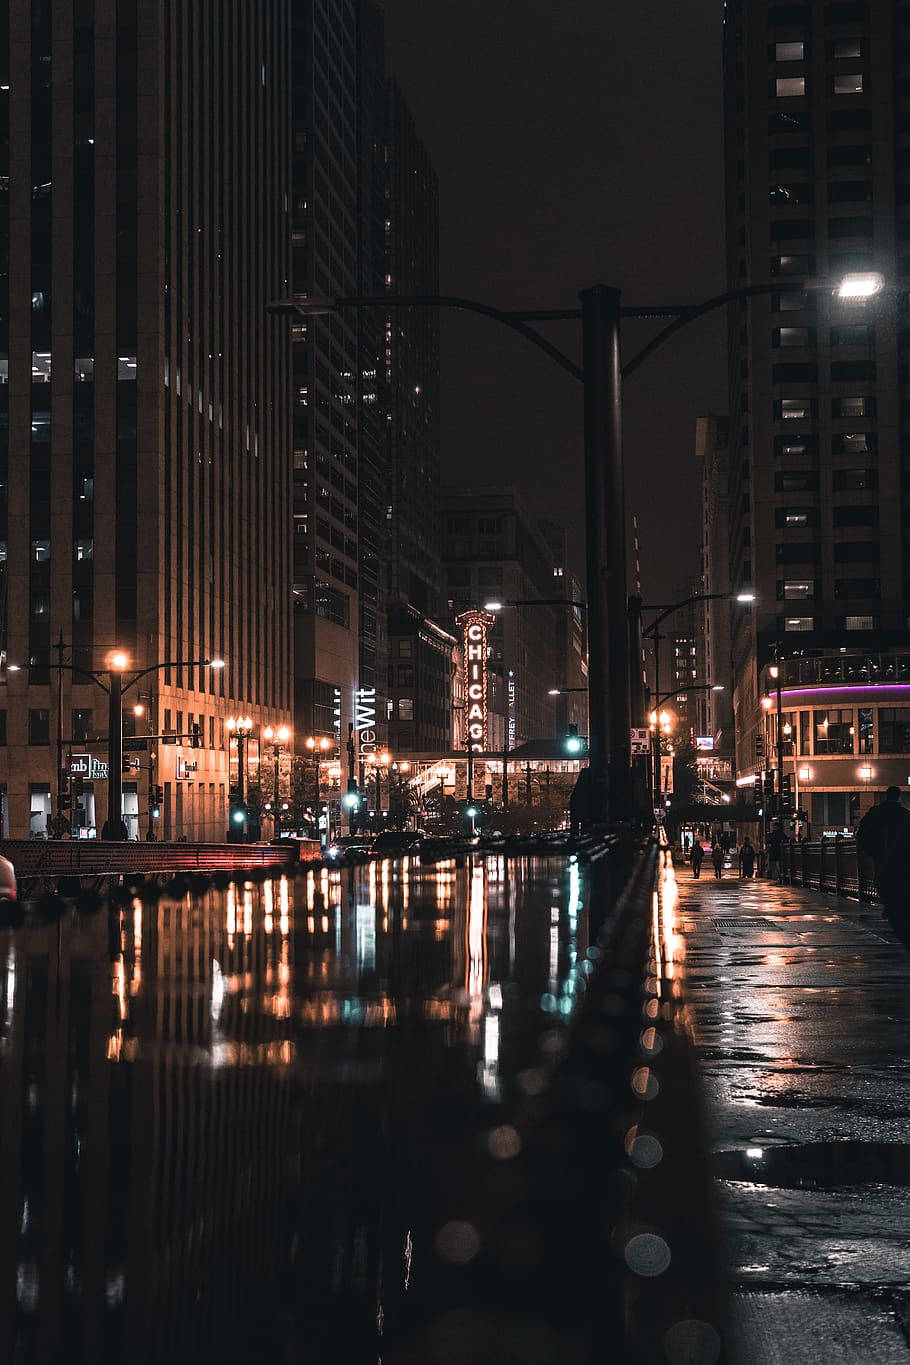 Dark Aesthetic Chicago City At Night Wallpaper